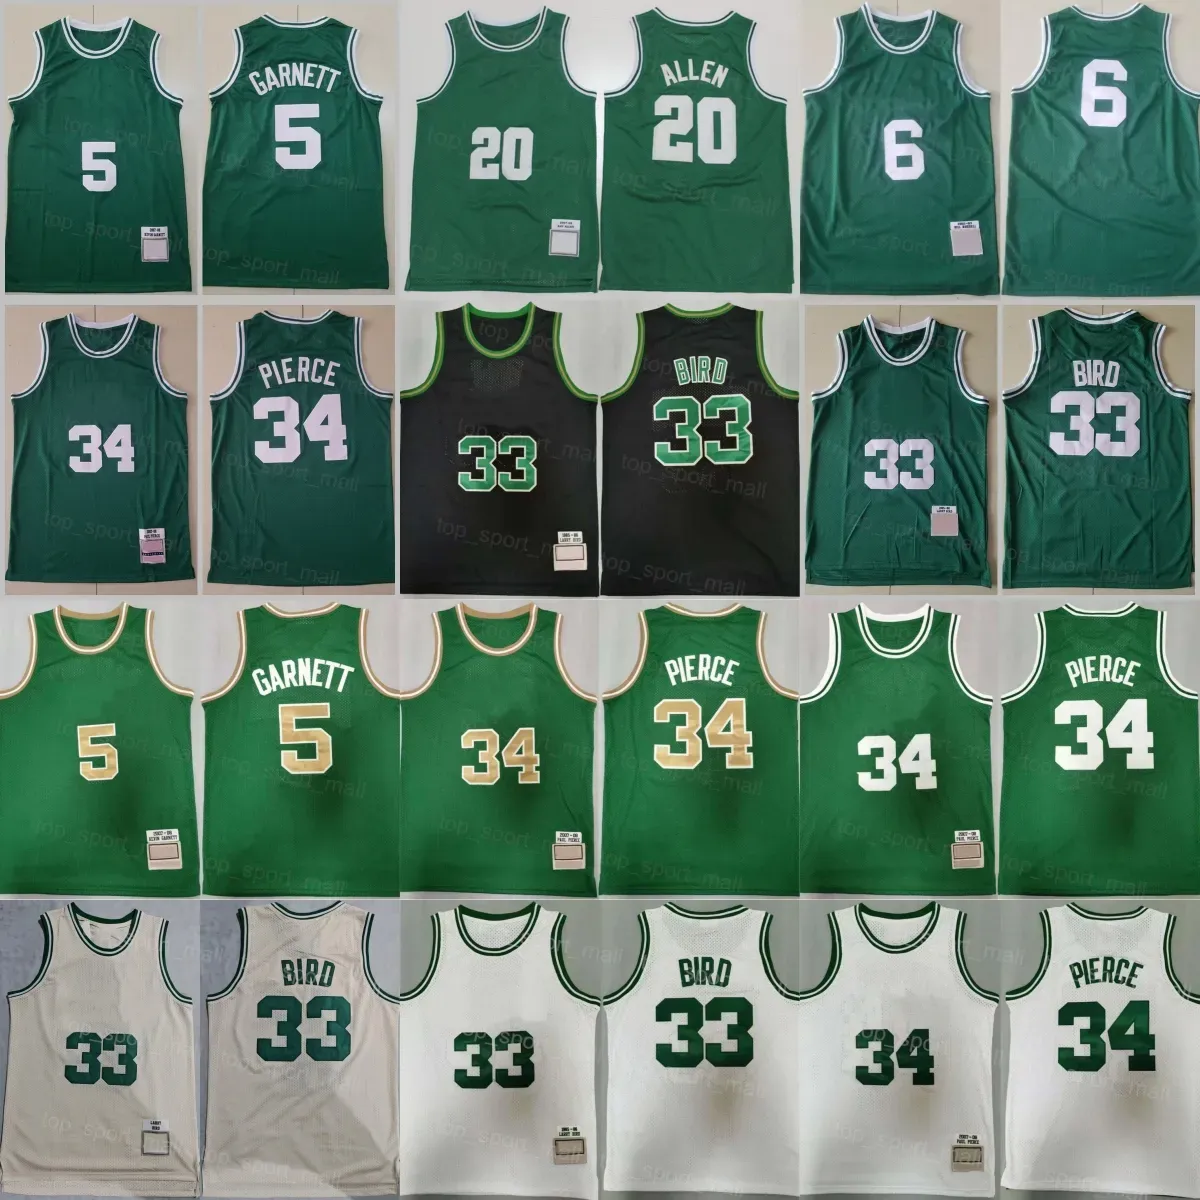 star uniforms Basketball Kevin Garnett Jersey Allen Paul Pierce 34 Larry Bird 33 Vintage Color Black Green White Breathable Stitched Sport Throwback High Quality